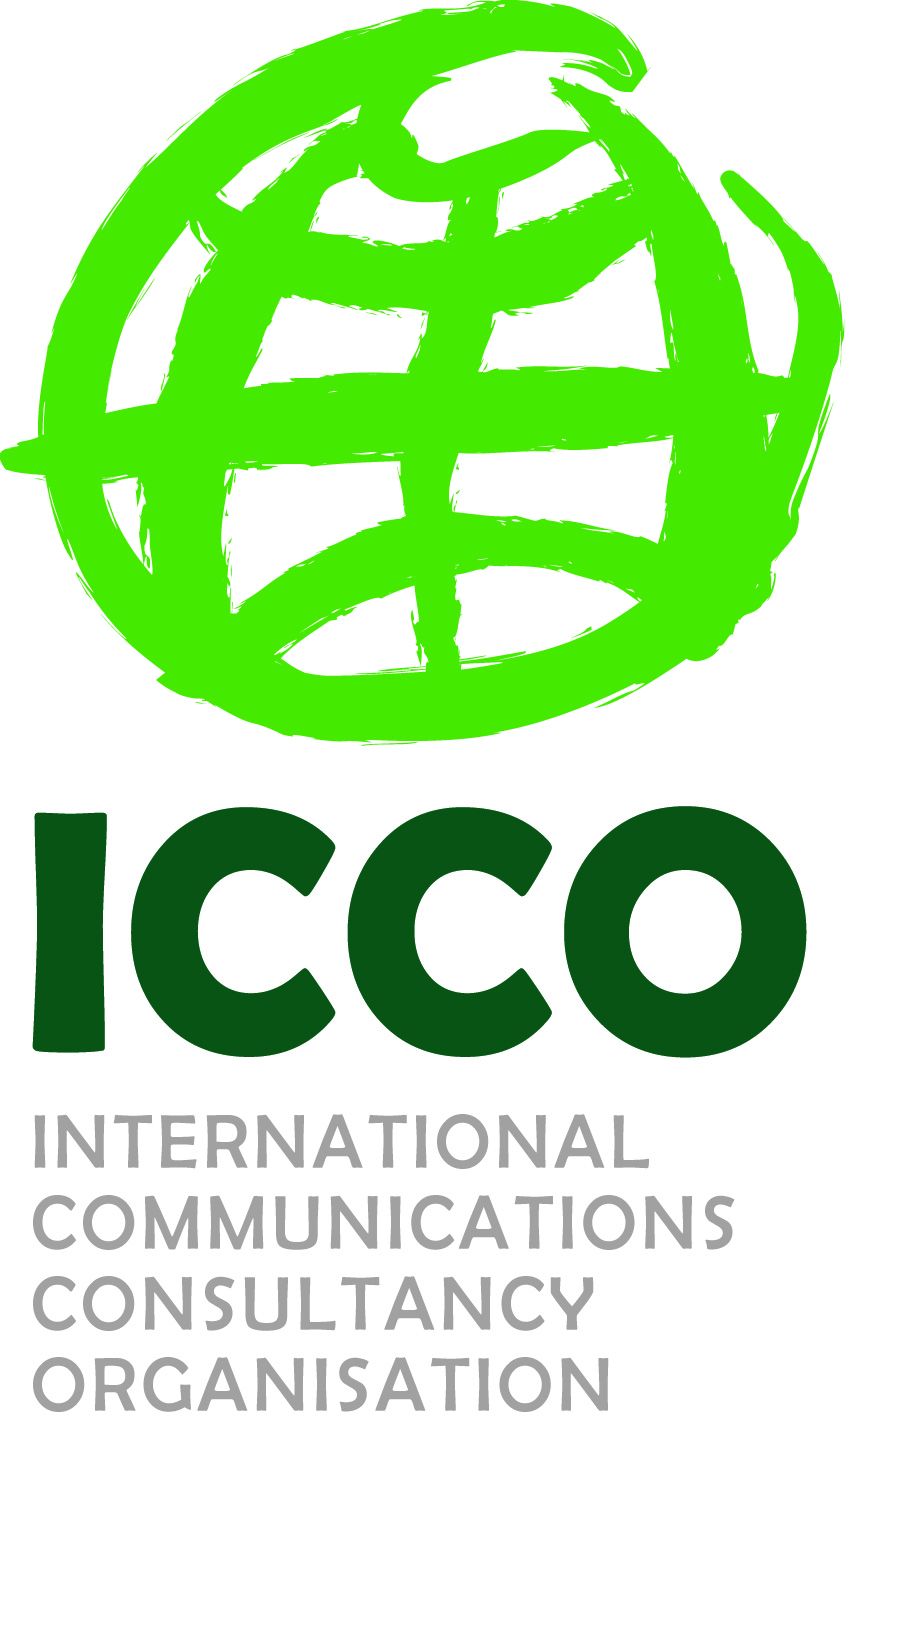 logo for International Communications Consultancy Organisation